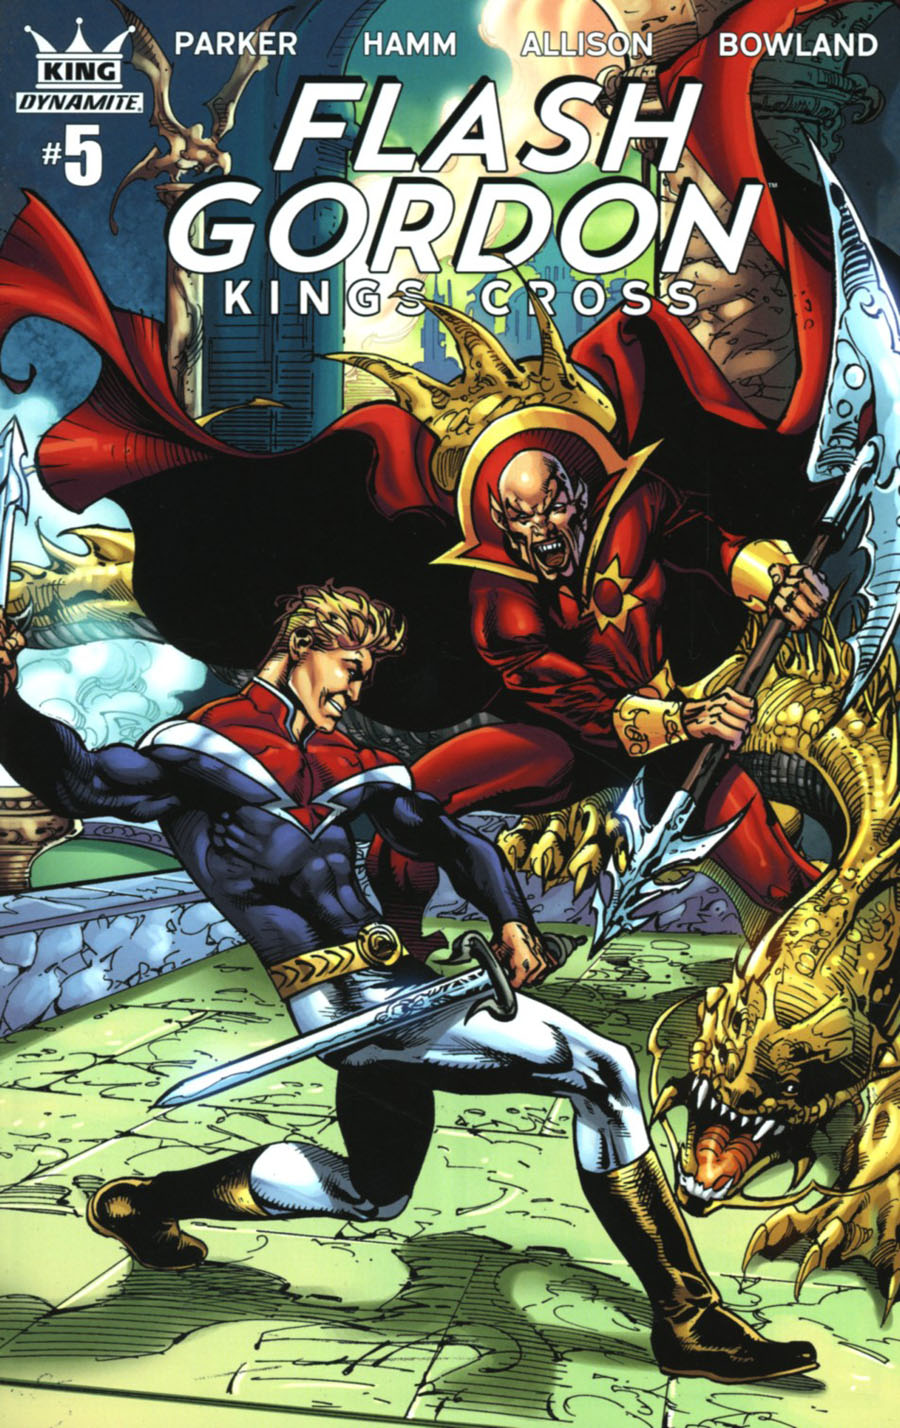 Flash Gordon Kings Cross #5 Cover C Variant Roberto Castro Subscription Cover